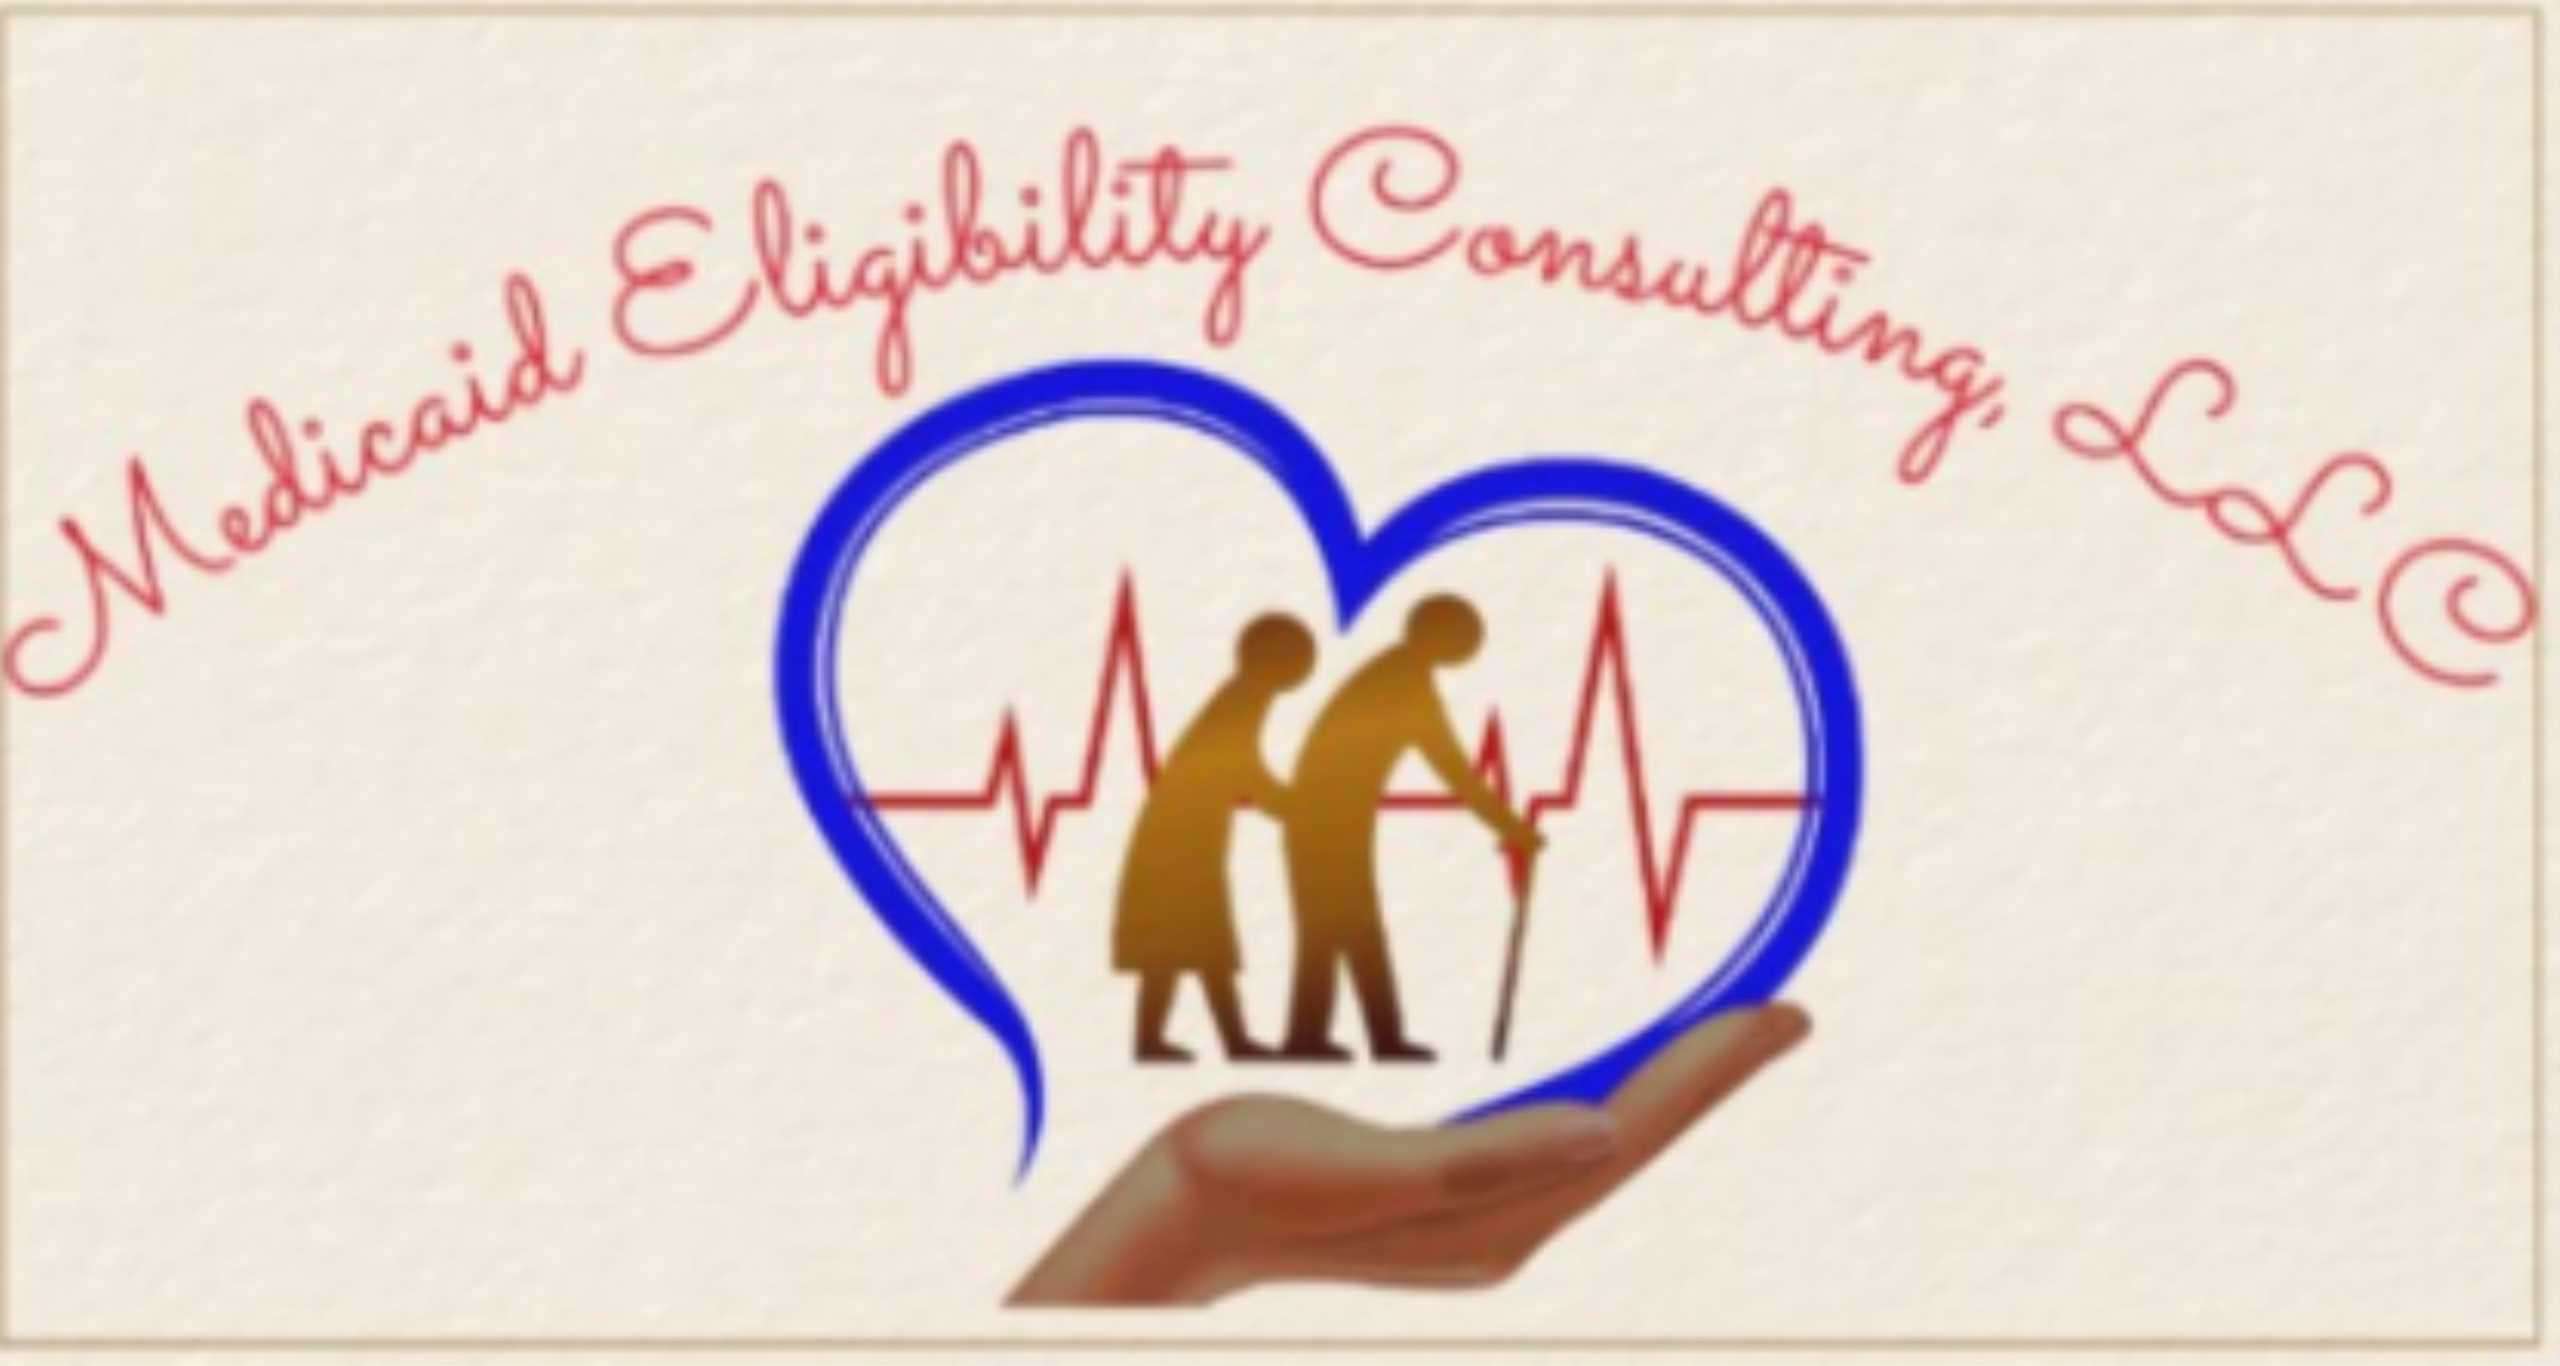 Medicaid Eligibility Consulting, LLC  Logo